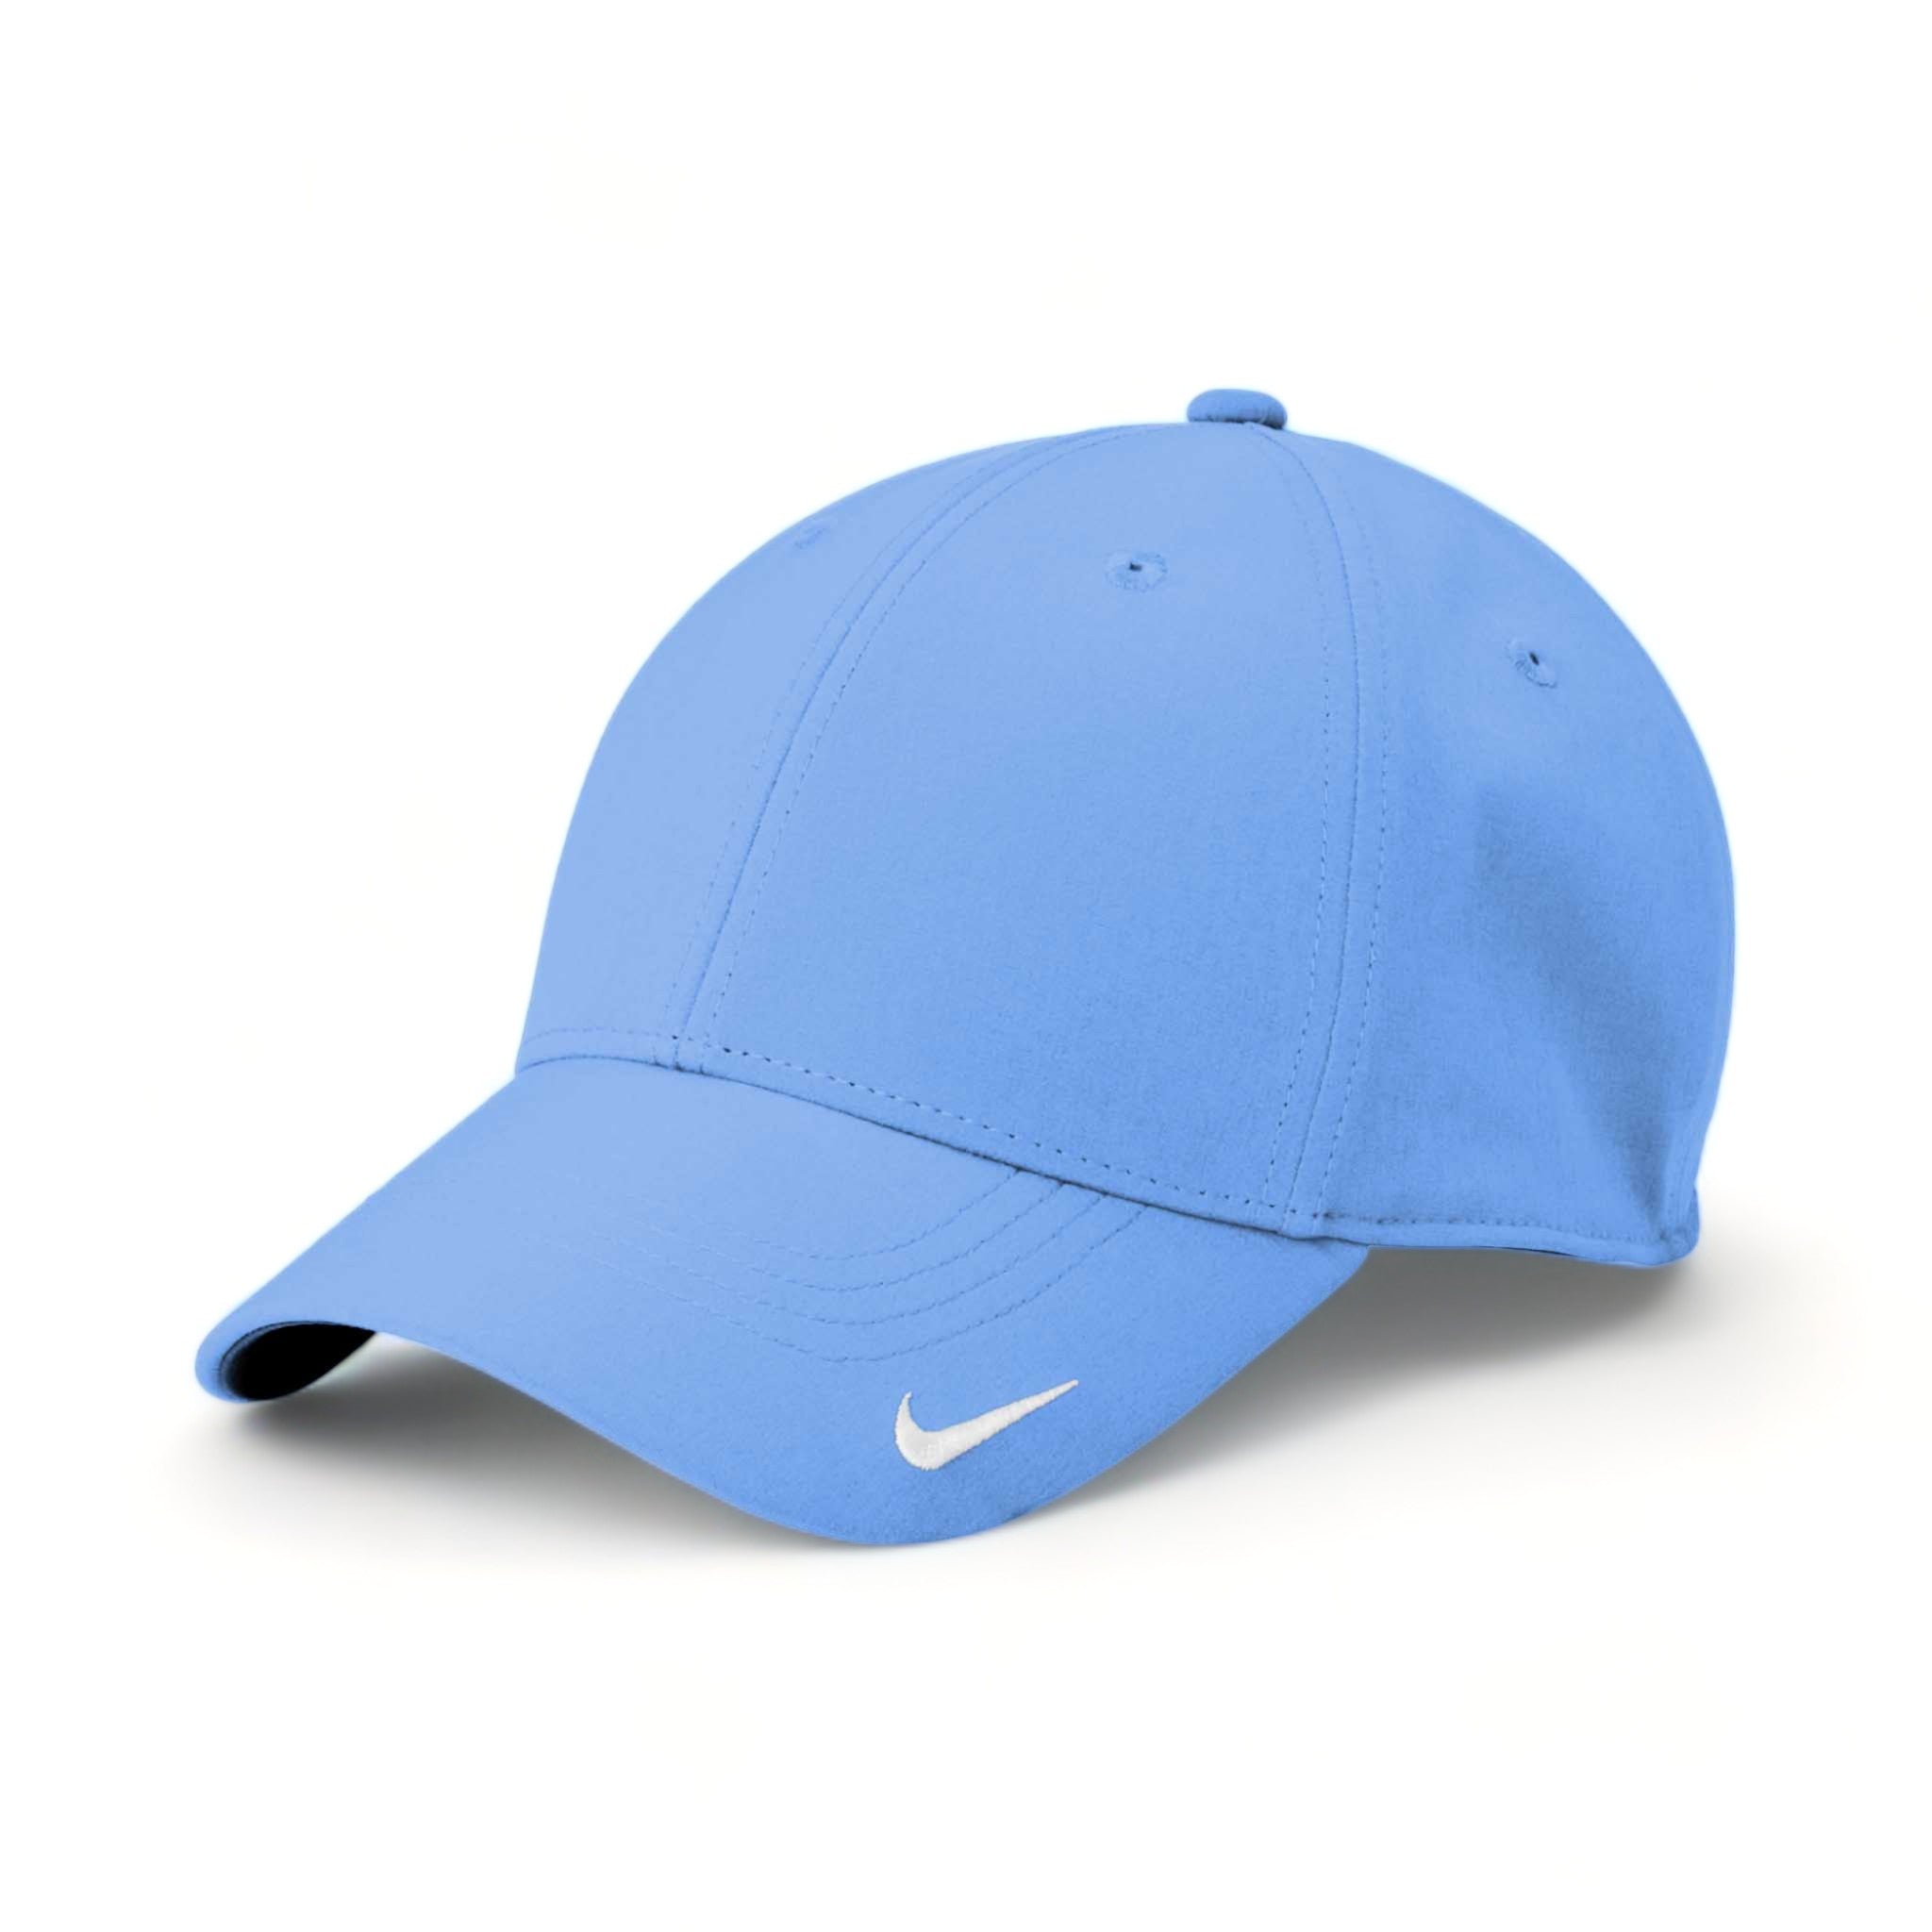 Side view of Nike NKFB6447 custom hat in valor blue